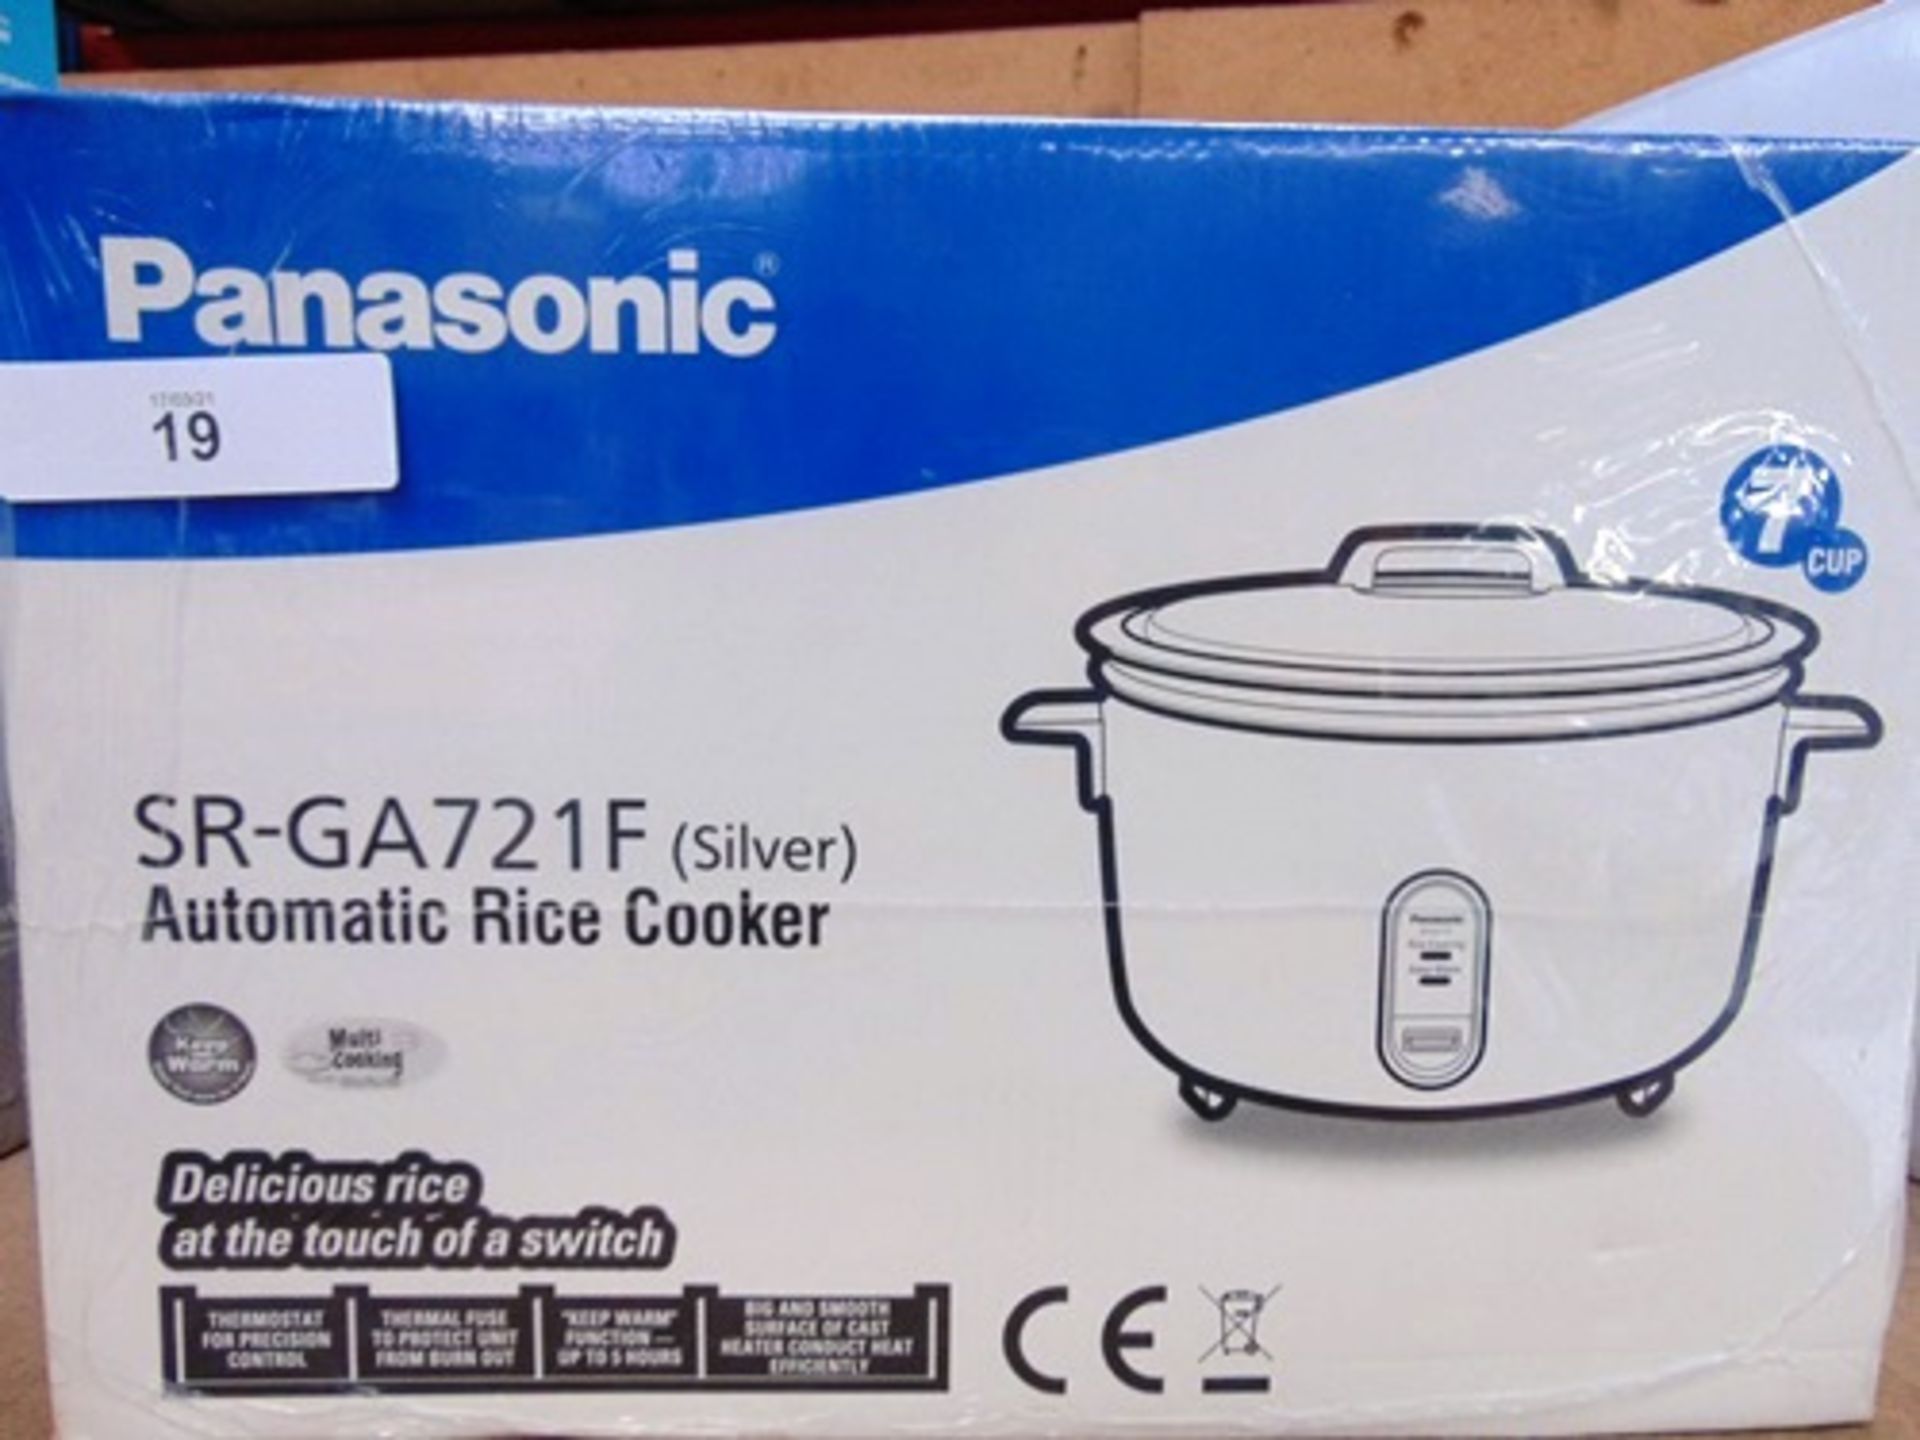 1 x Panasonic automatic rice cooker, model SR-GA721F - New (ES2)